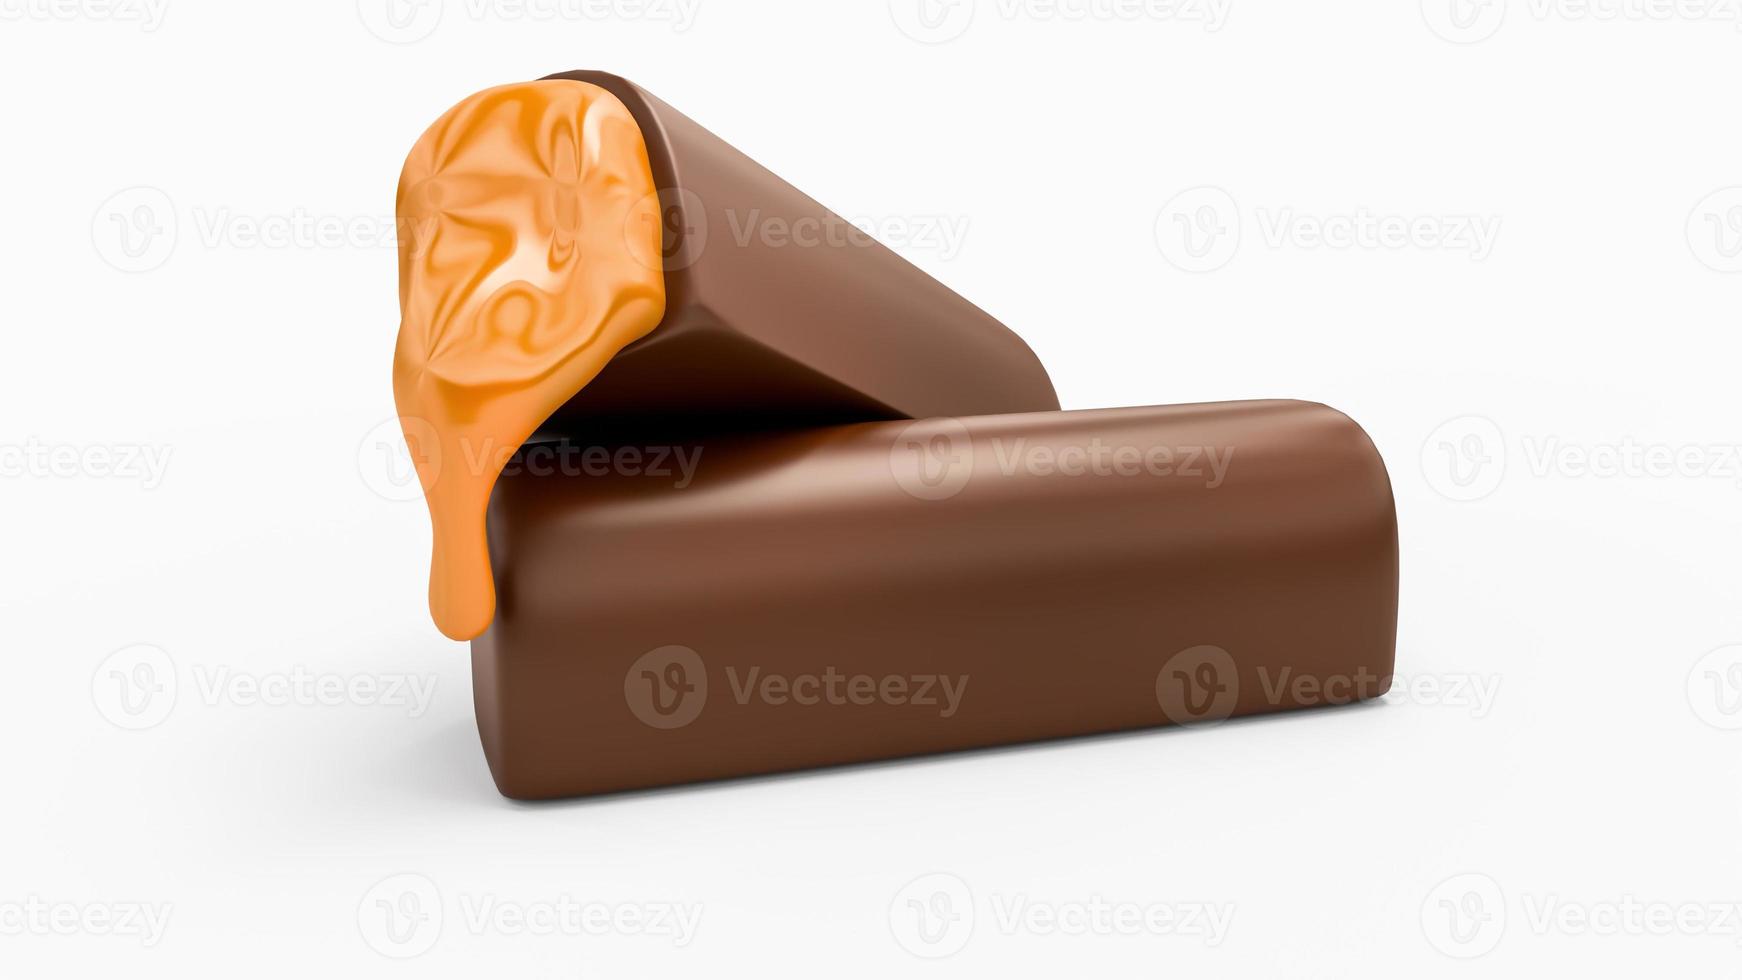 chocoladereep met zoete karamel die smelt, chocoladereep gebroken met karamelvulling 3d illustratie foto